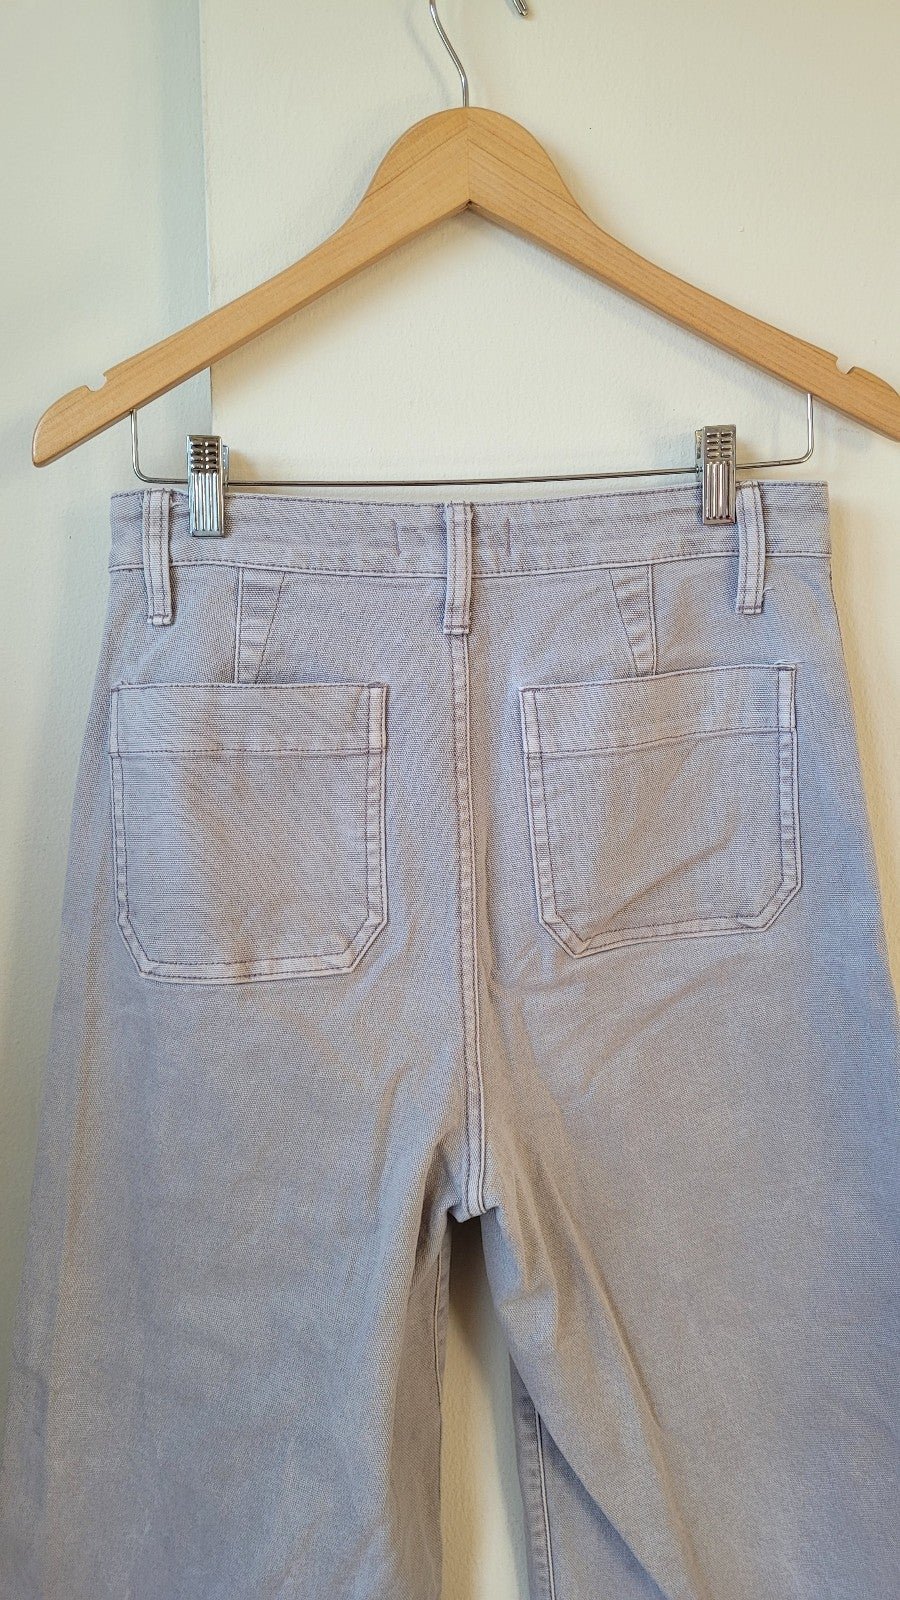 Latest  Women´s Madewell Emmett Wide-leg crop pants, sz 27T poeYJgl2P online store